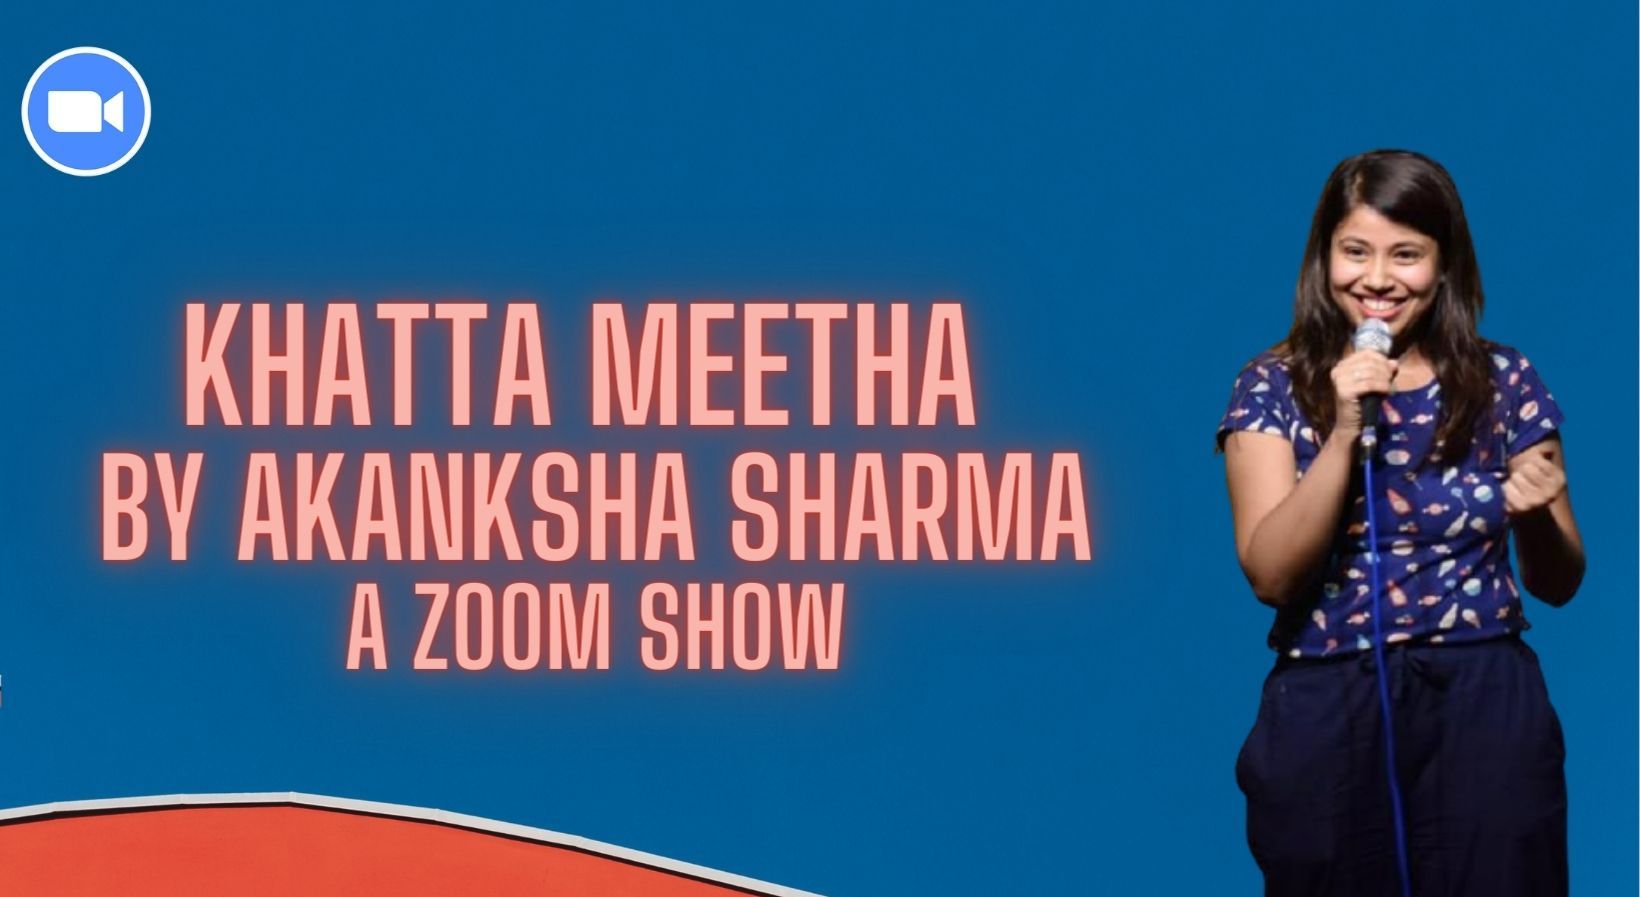 Khatta Meetha by Akanksha Sharma